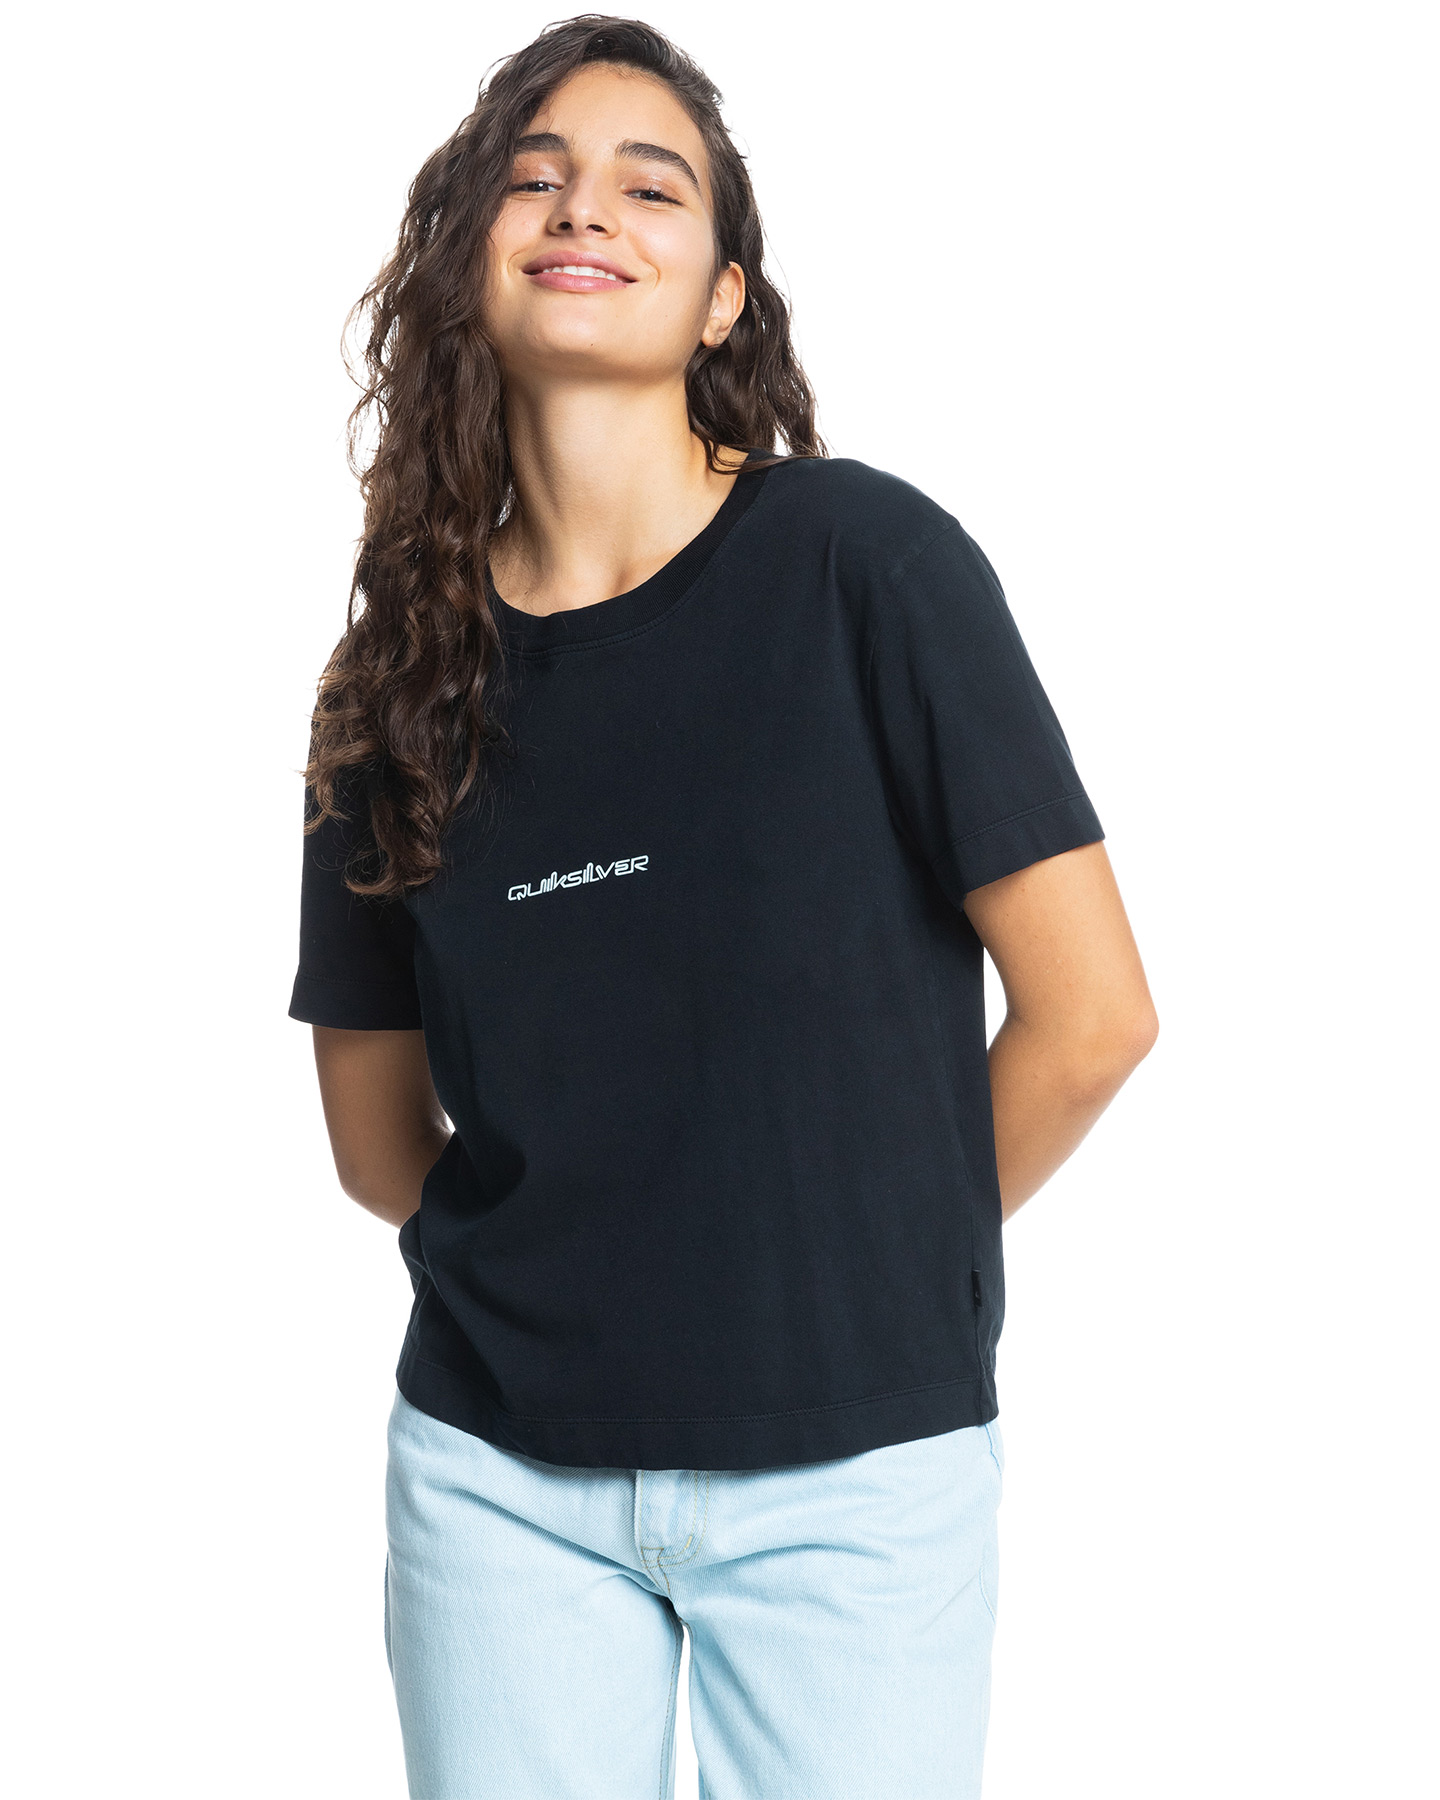 Quiksilver Quiksilver Womens T-Shirt - Black | SurfStitch